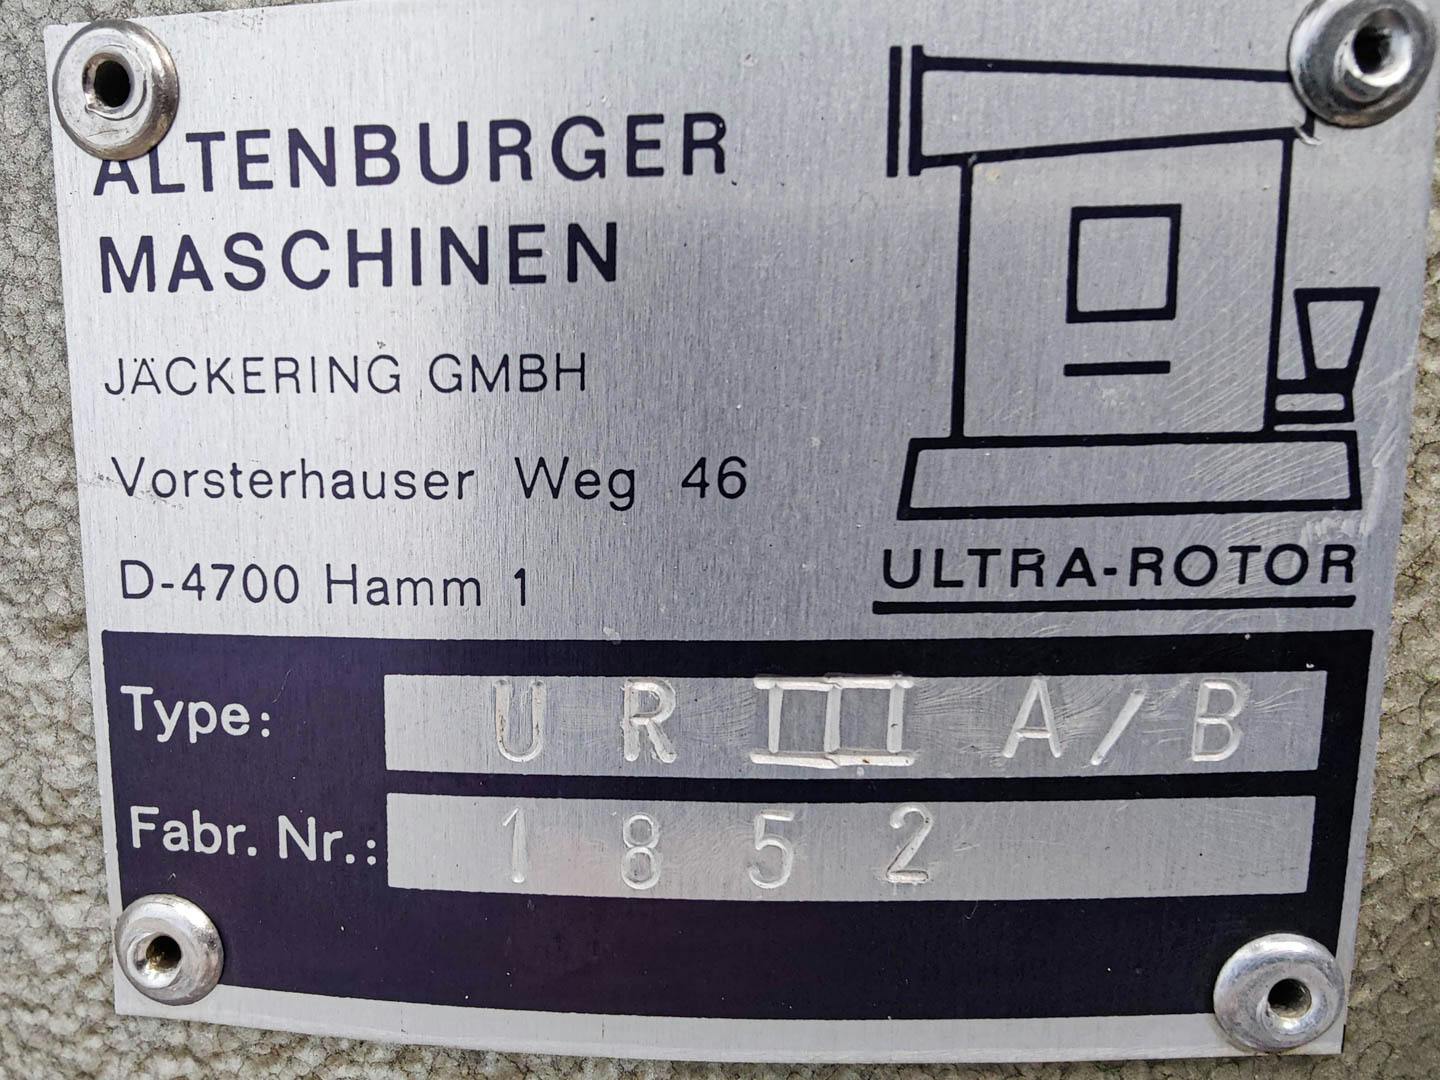 Jackering UR III A/B "Ultra-Rotor" - Feinprallmühle - image 9